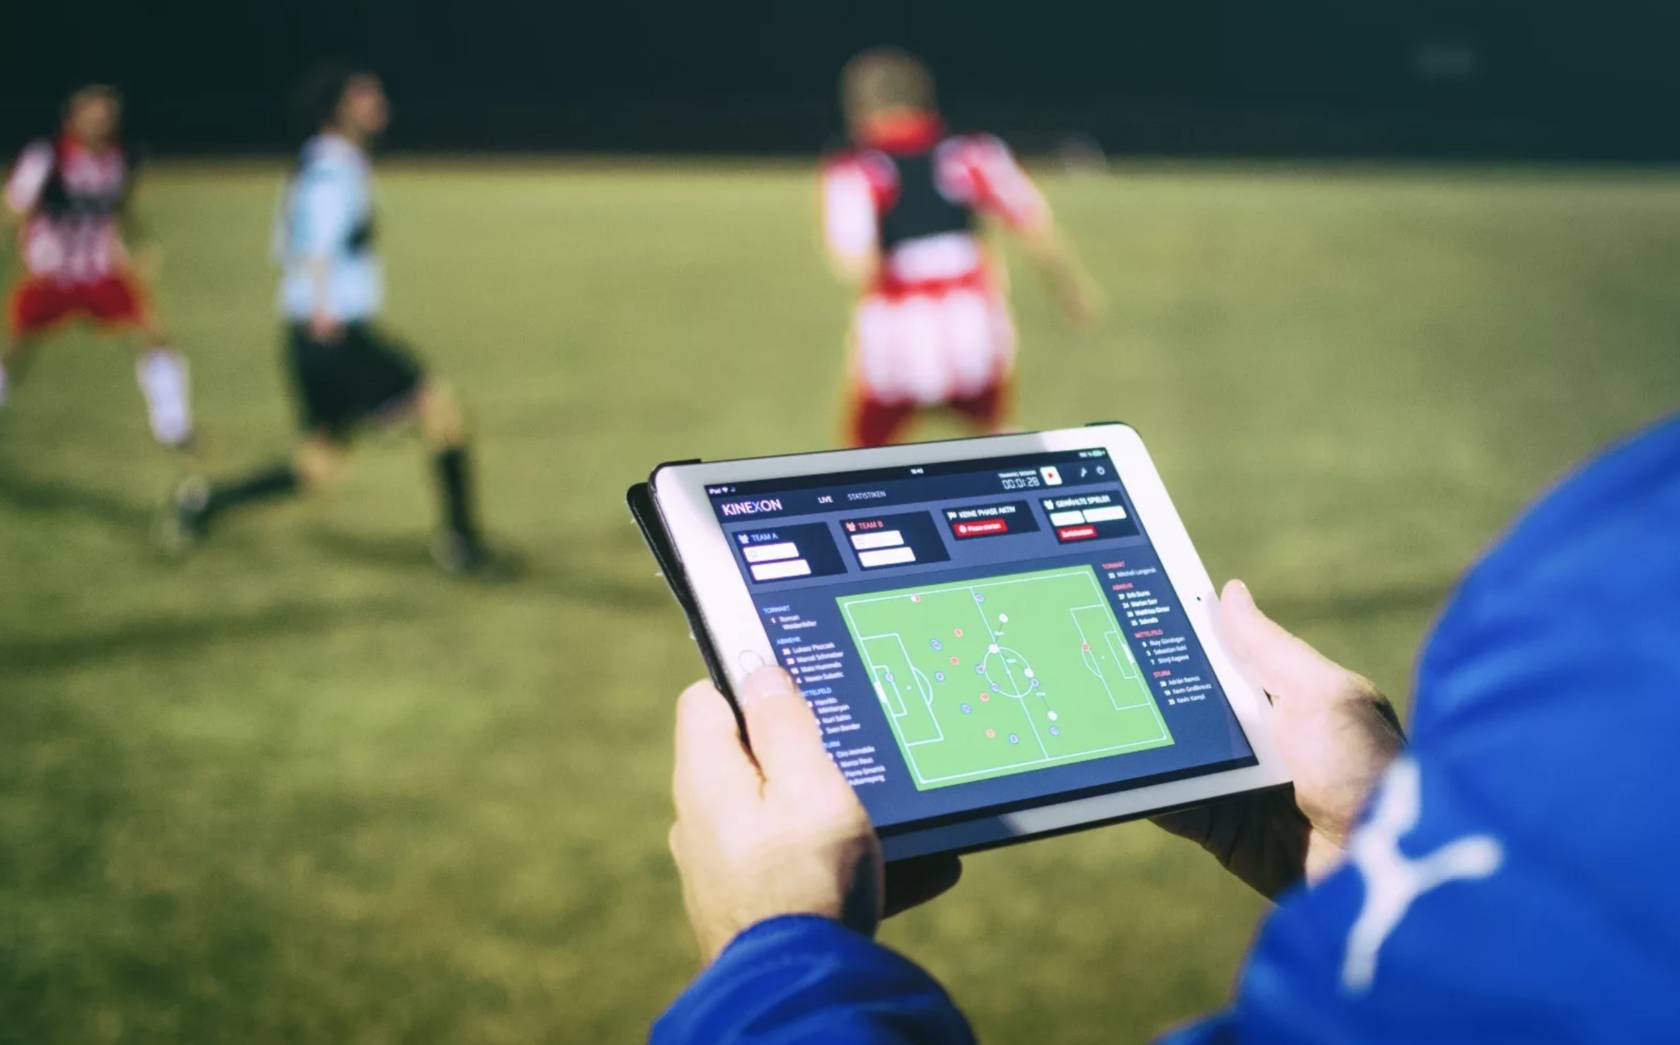 Live футбол спортивная. Технологии в футболе. Информационные технологии в футболе. Технологии в спорте. Современные технологии в футболе.